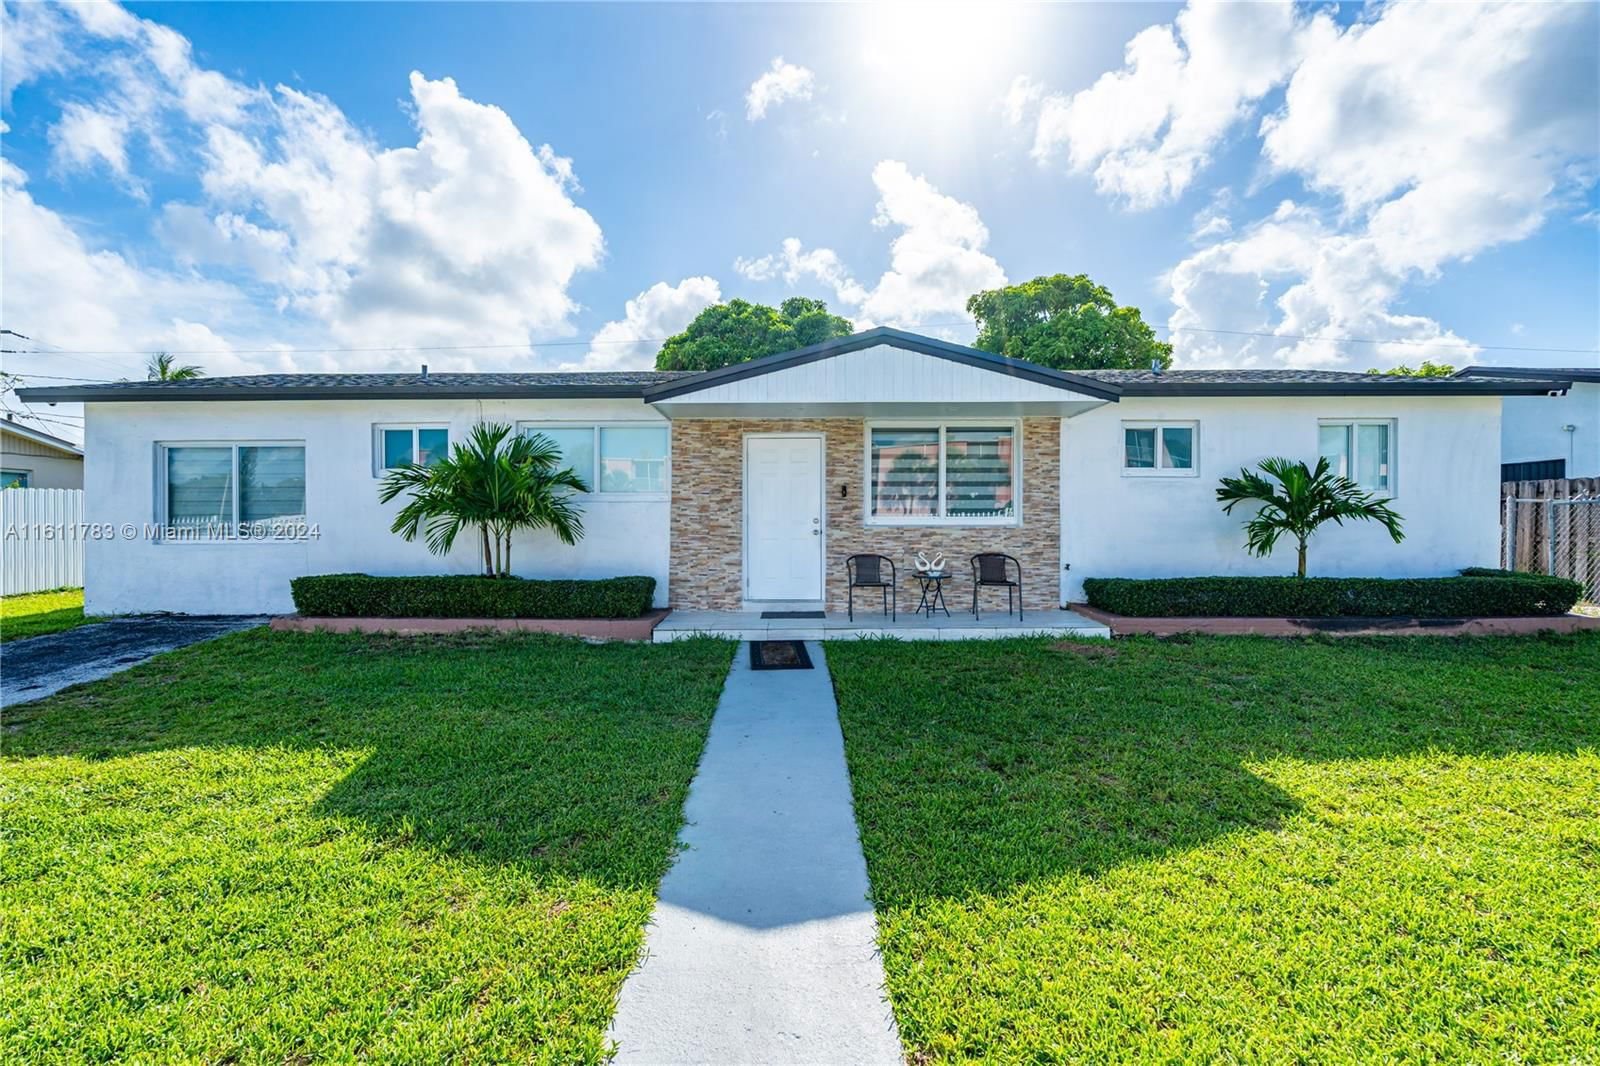 Real estate property located at 19900 114th Ave, Miami-Dade County, SO MIAMI HEIGHTS ADDN V, Miami, FL